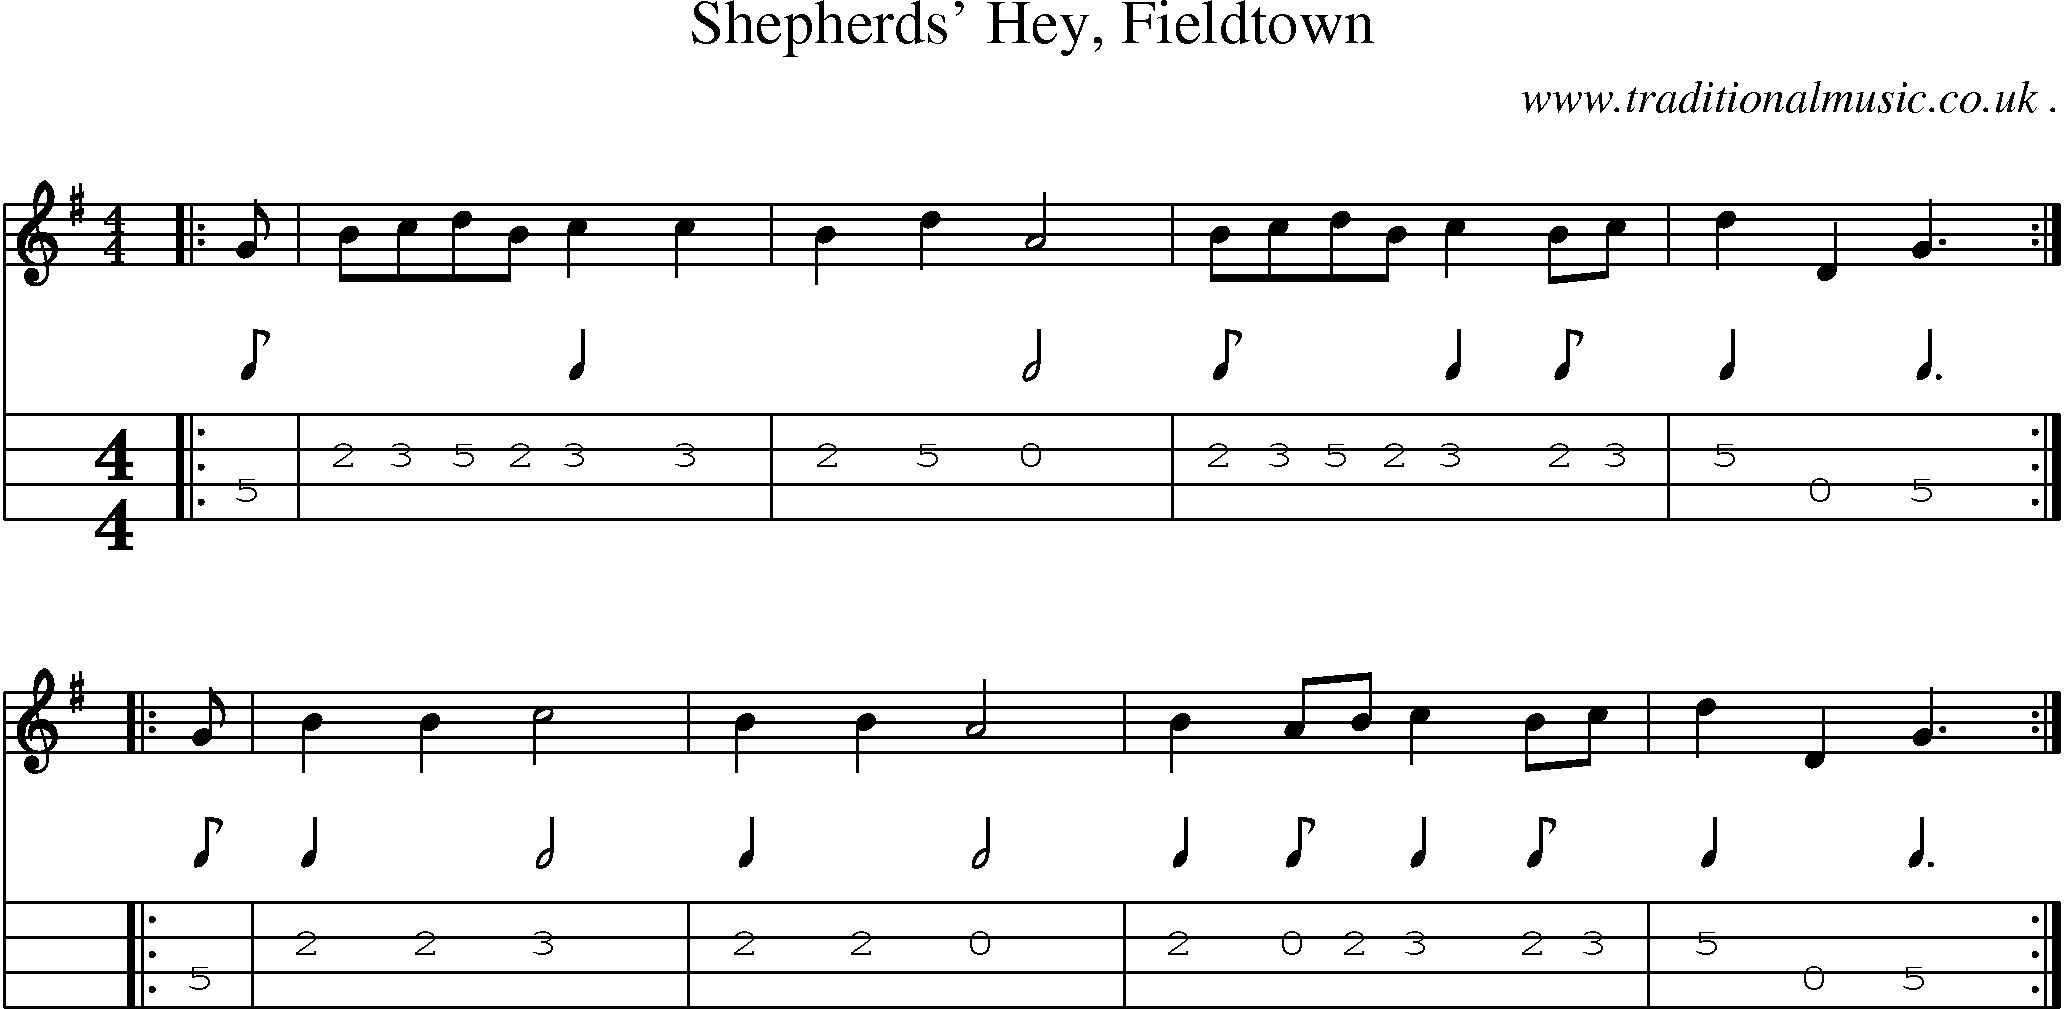 Sheet-Music and Mandolin Tabs for Shepherds Hey Fieldtown